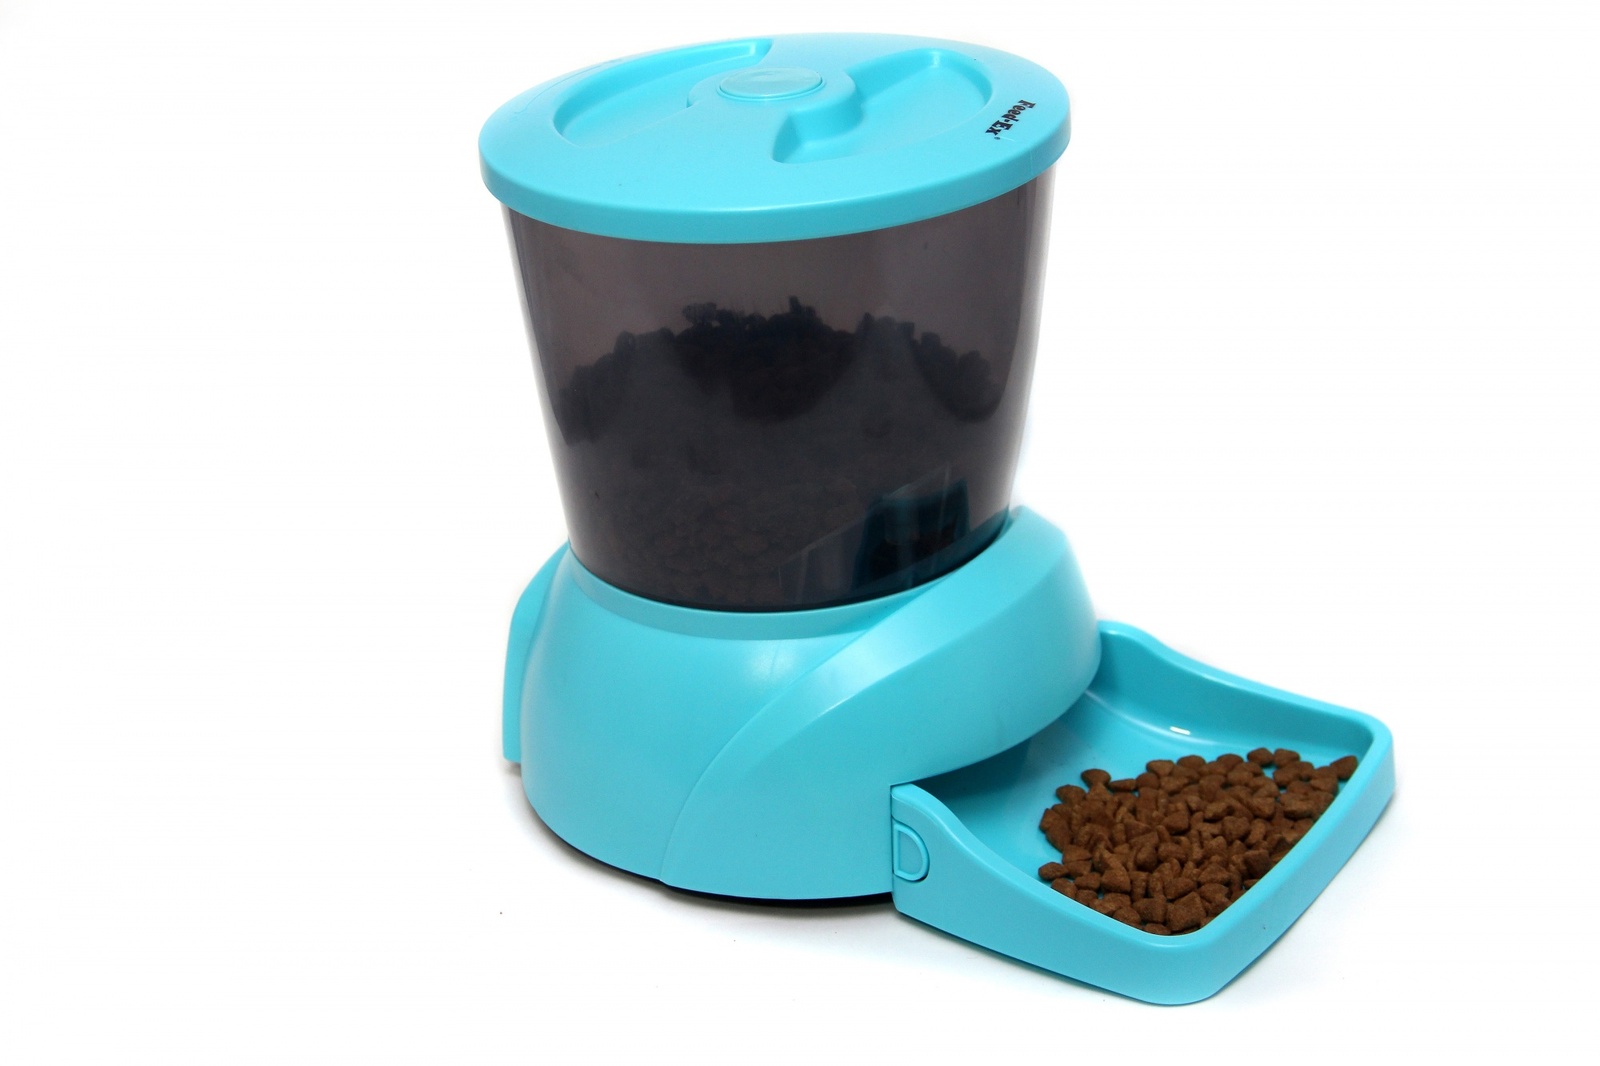 feedex feedex автокормушка на 4 кормления для 1 1 2 кг корма голубая 1 8 кг Feedex Feedex автокормушка на 2 кг корма для кошек и мелких пород собак, голубая (1,9 кг)